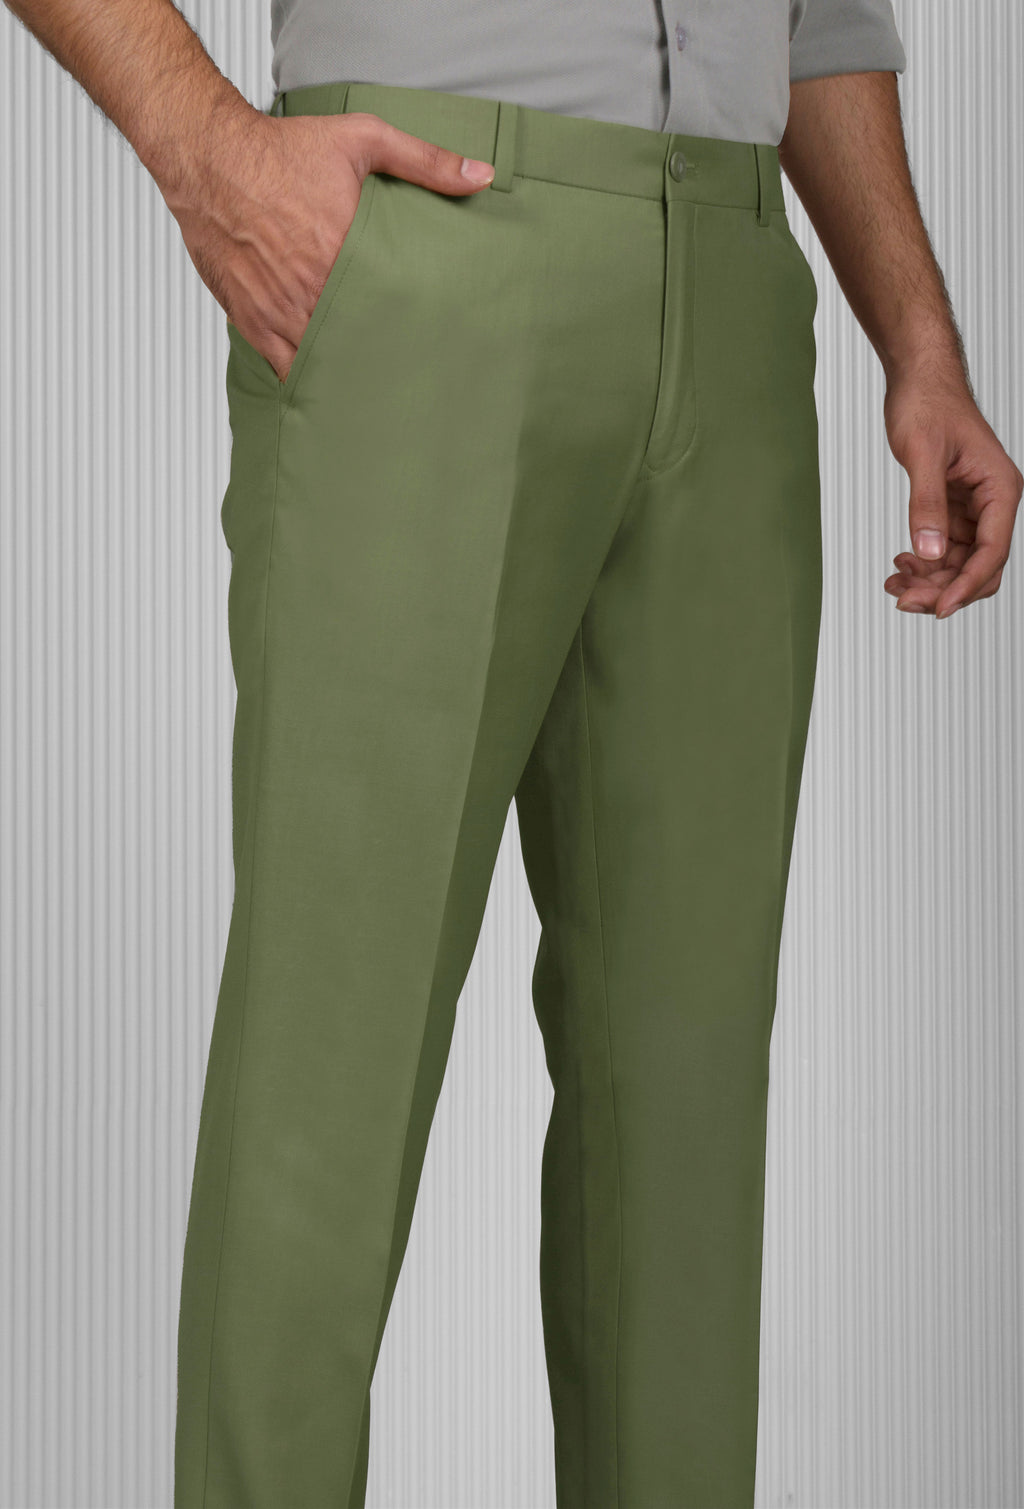 Mint Green Pants 